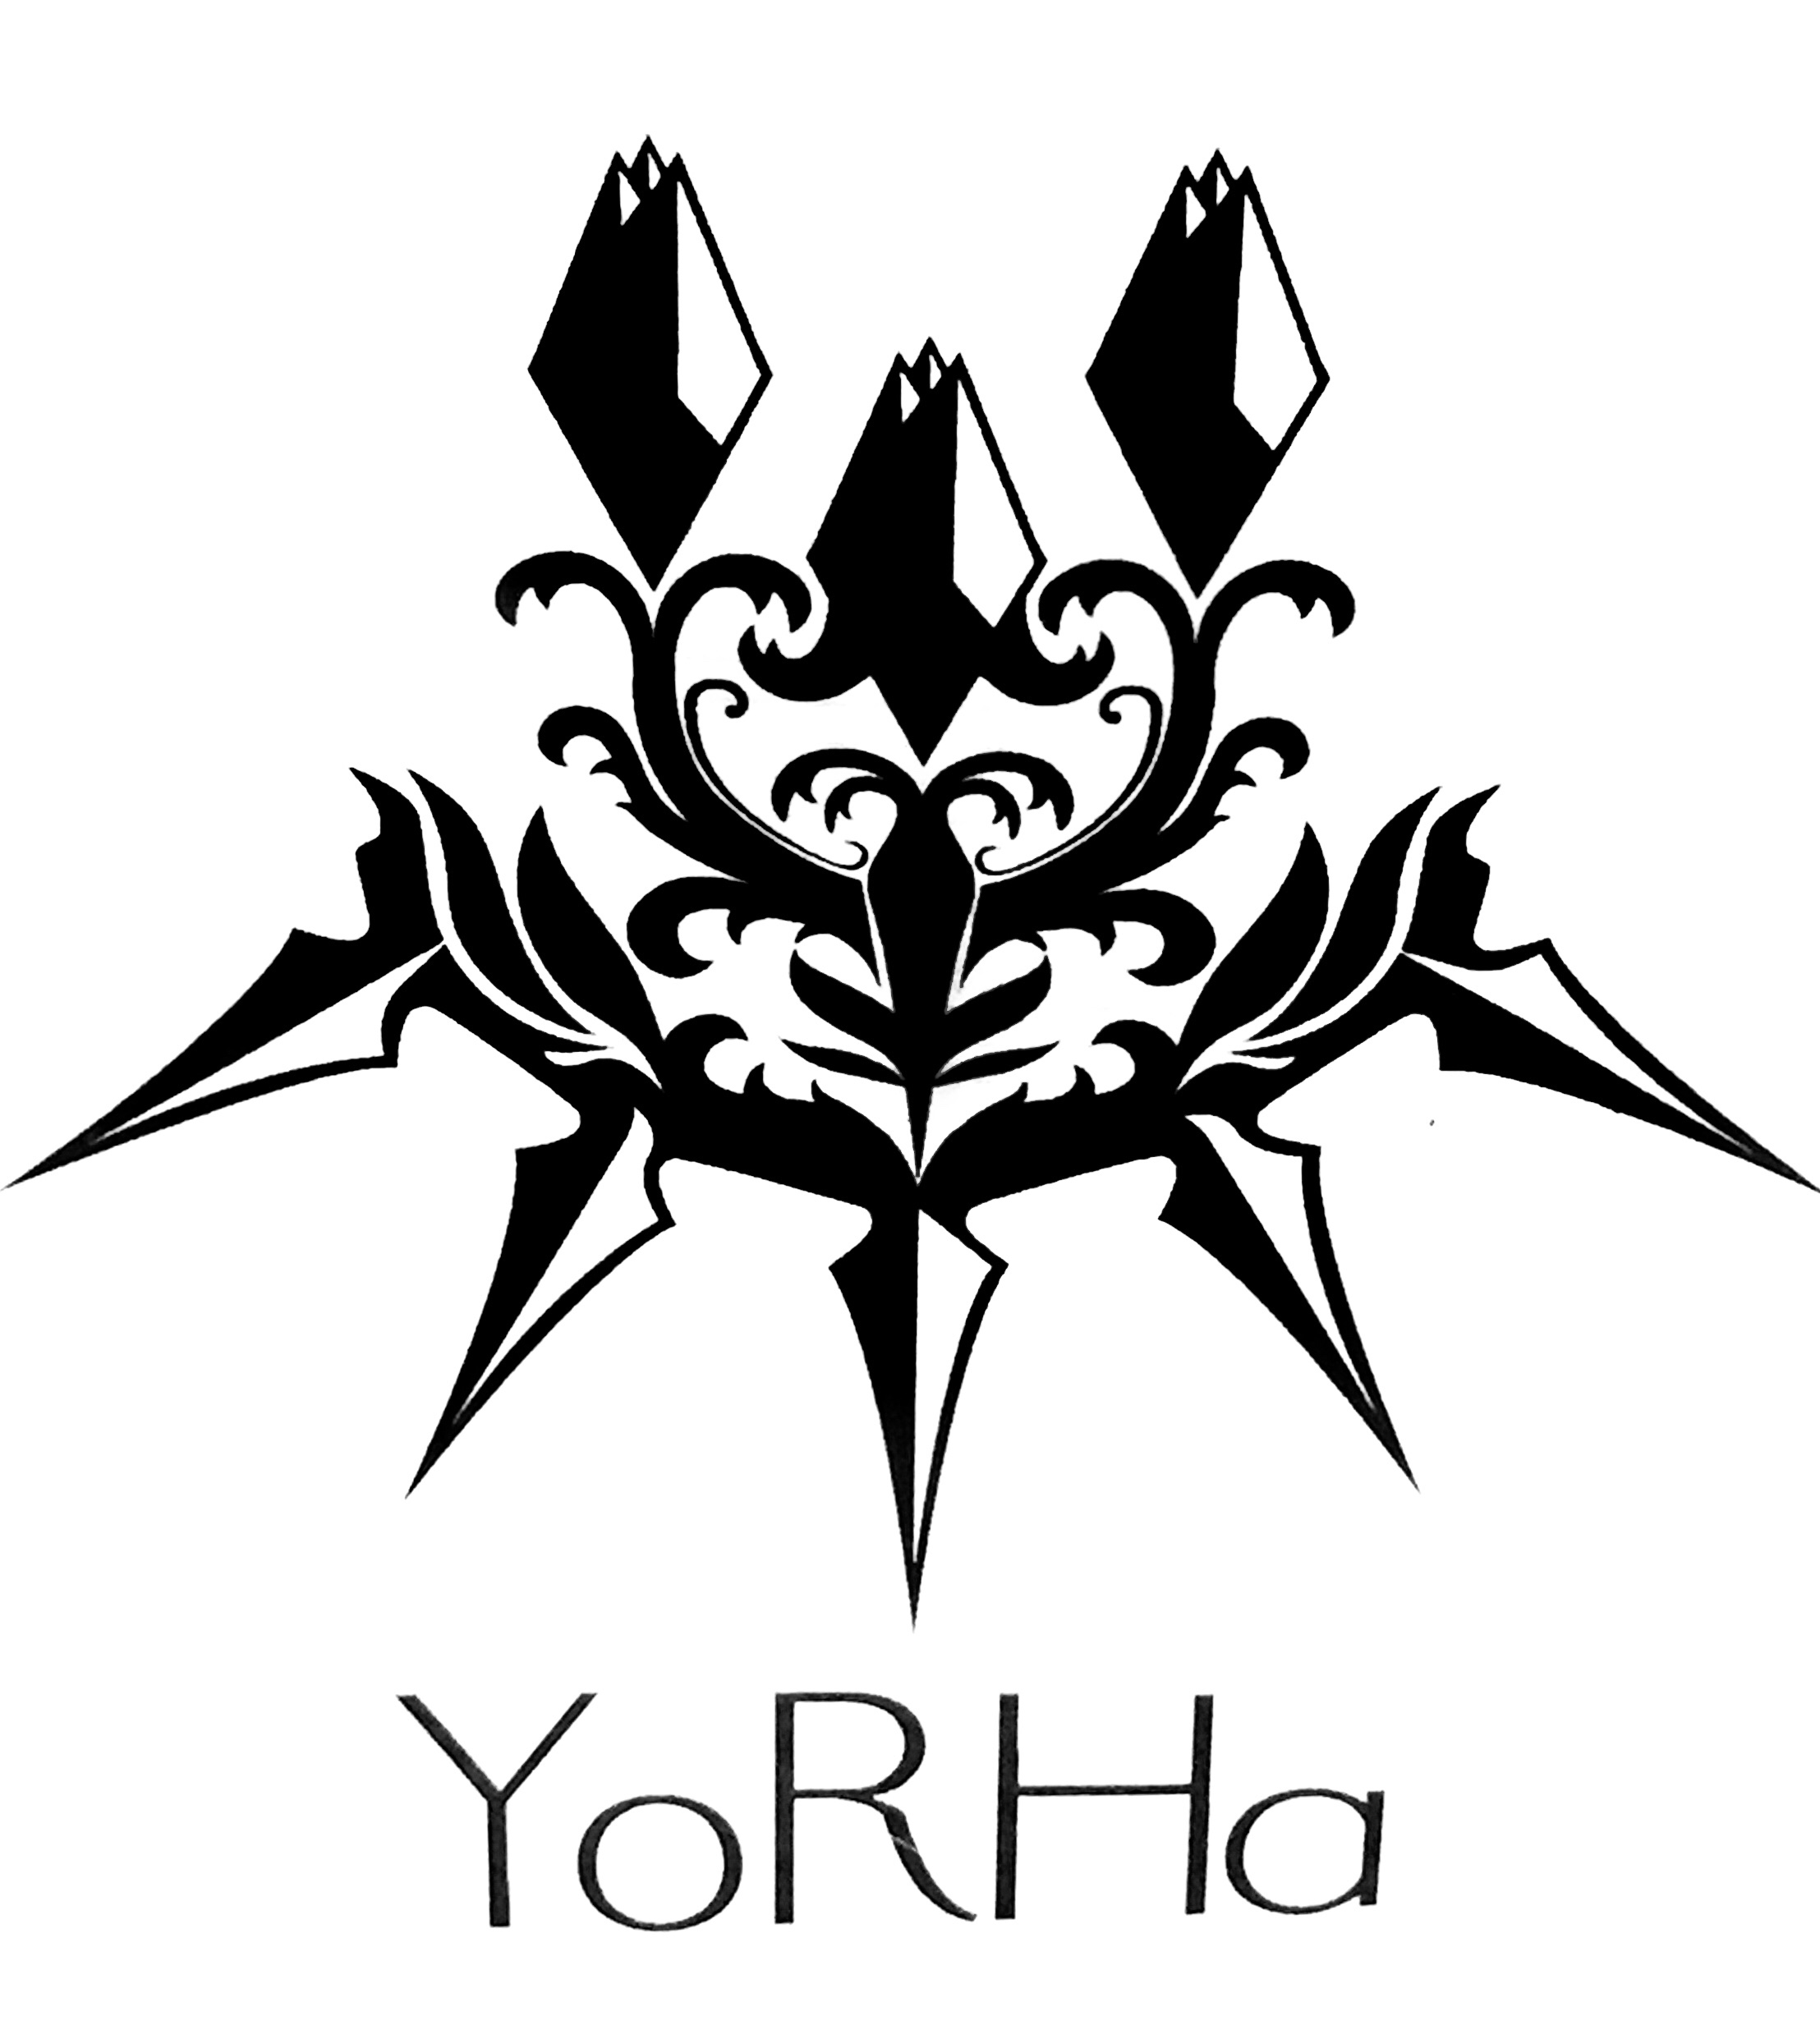 Project yorha